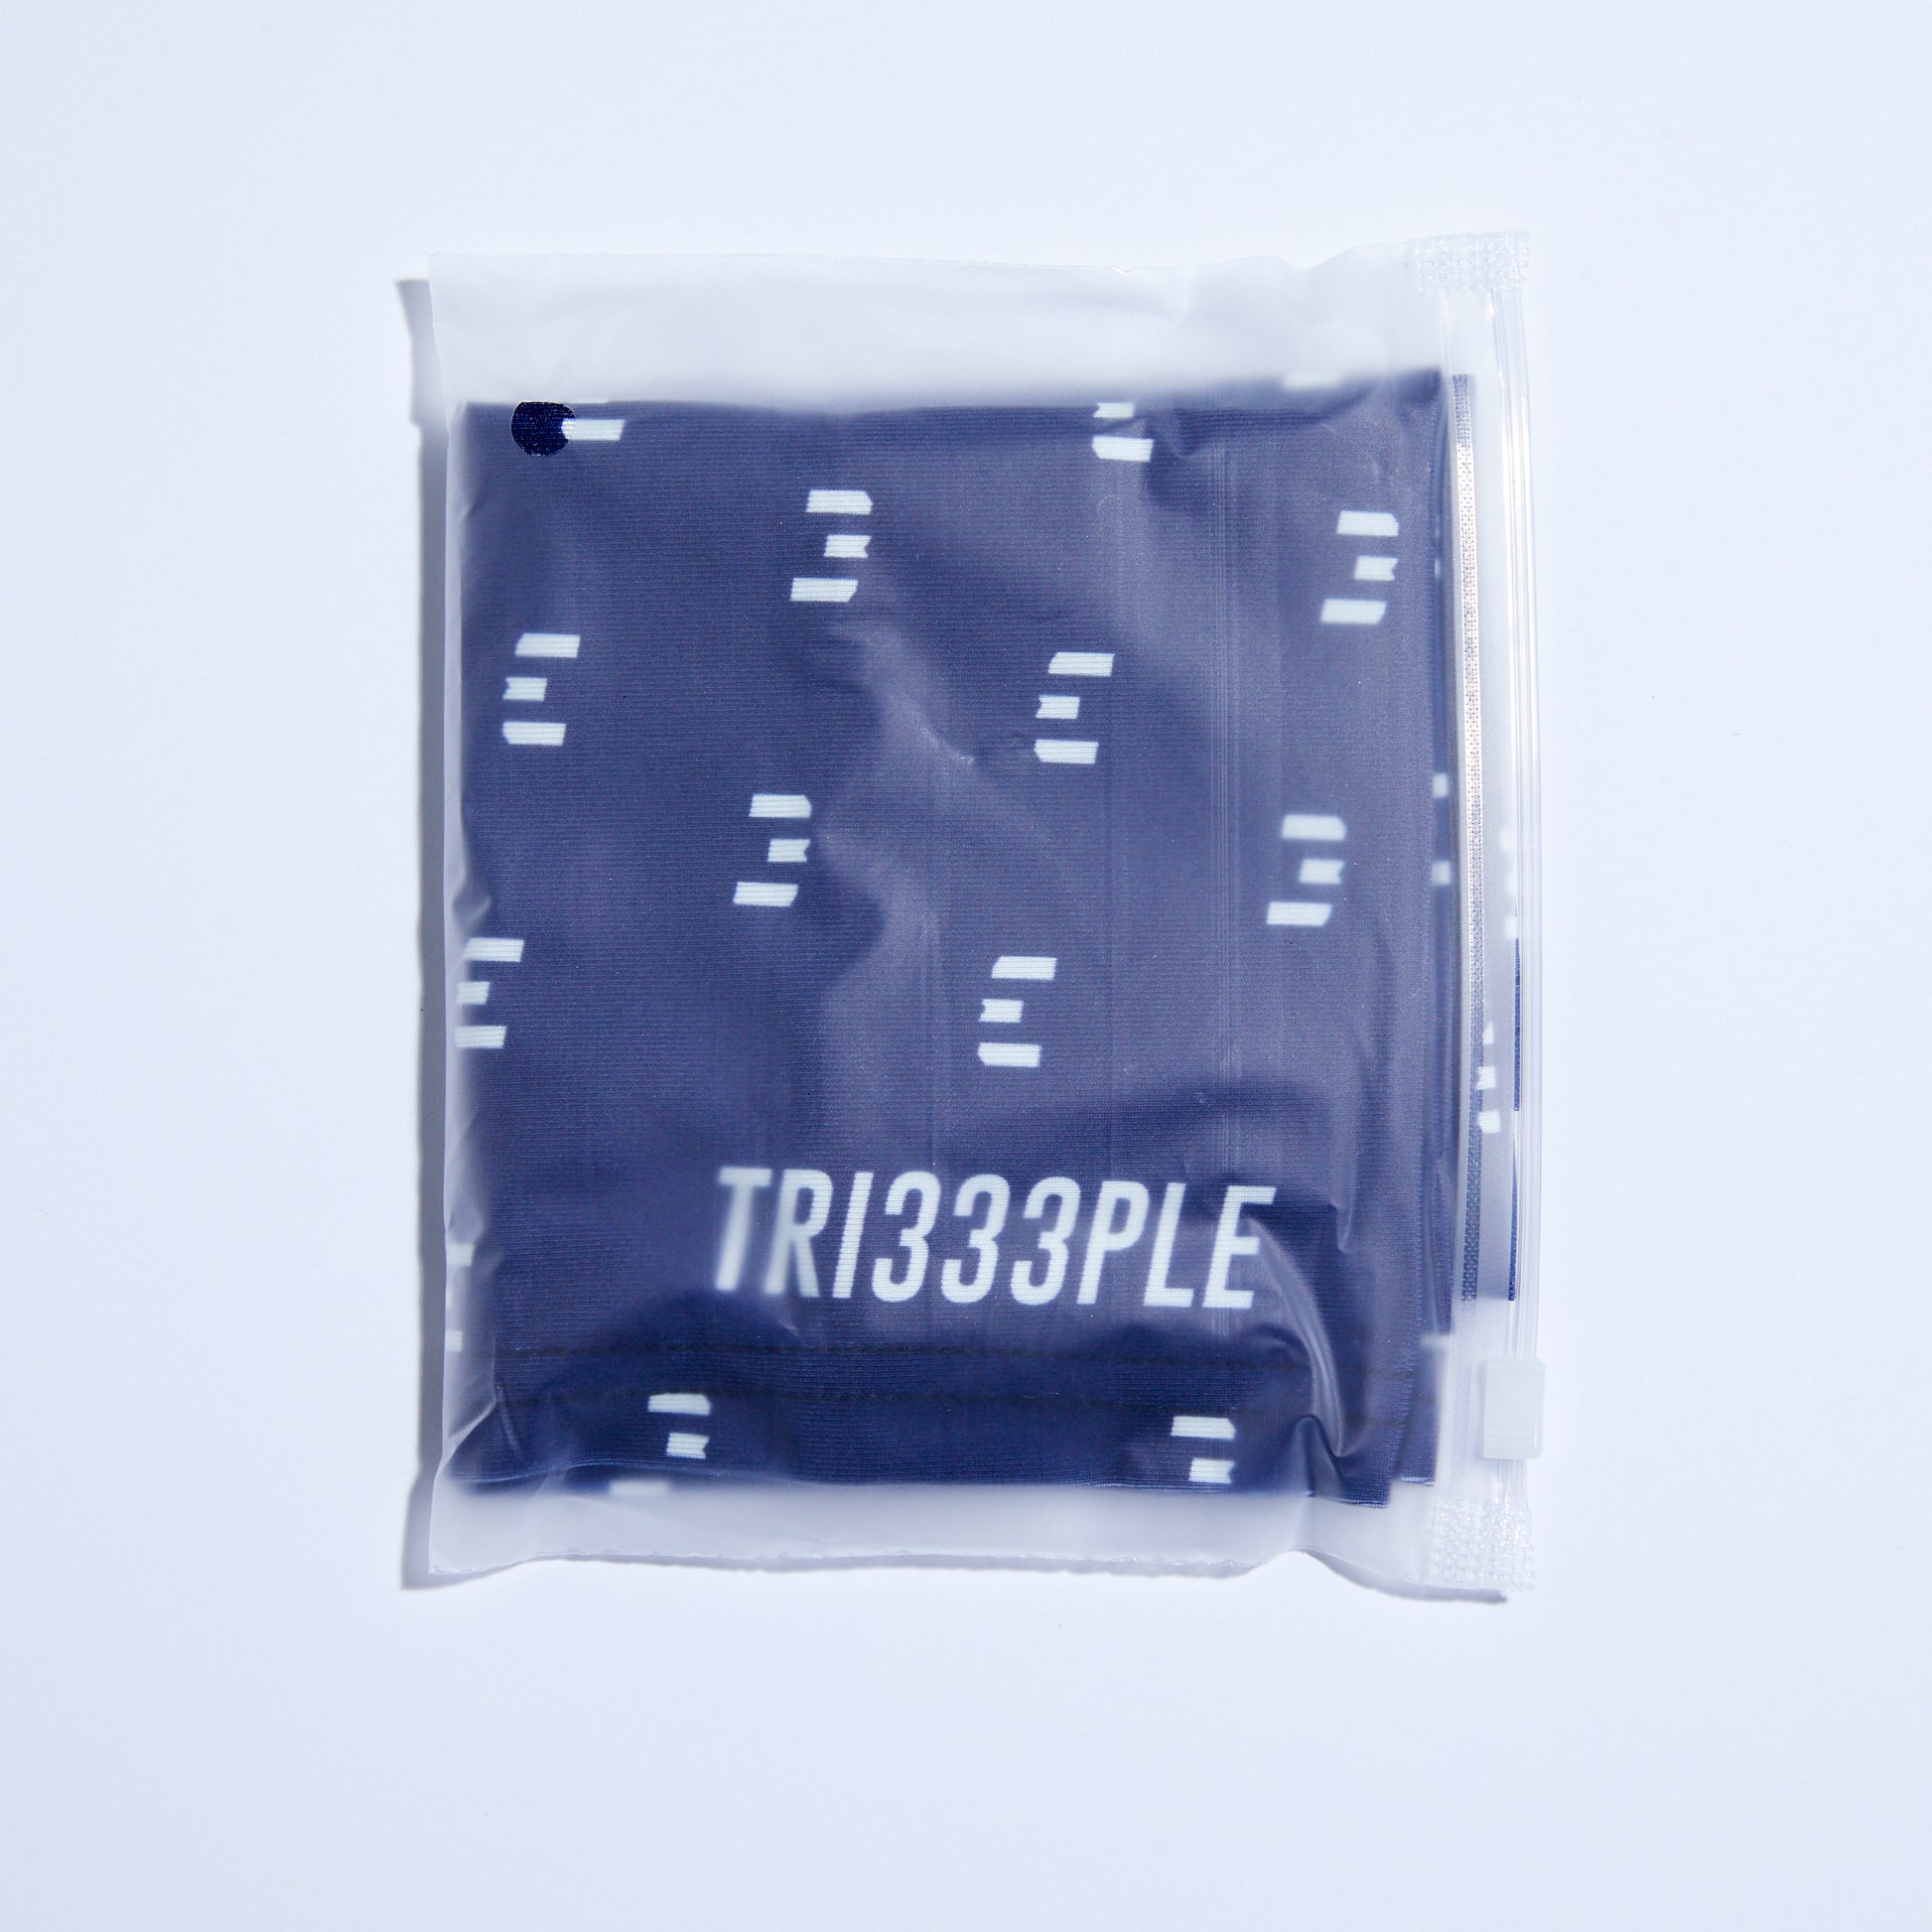 tri333ple lycra headbuff for motorcycle midnight blu in packaging